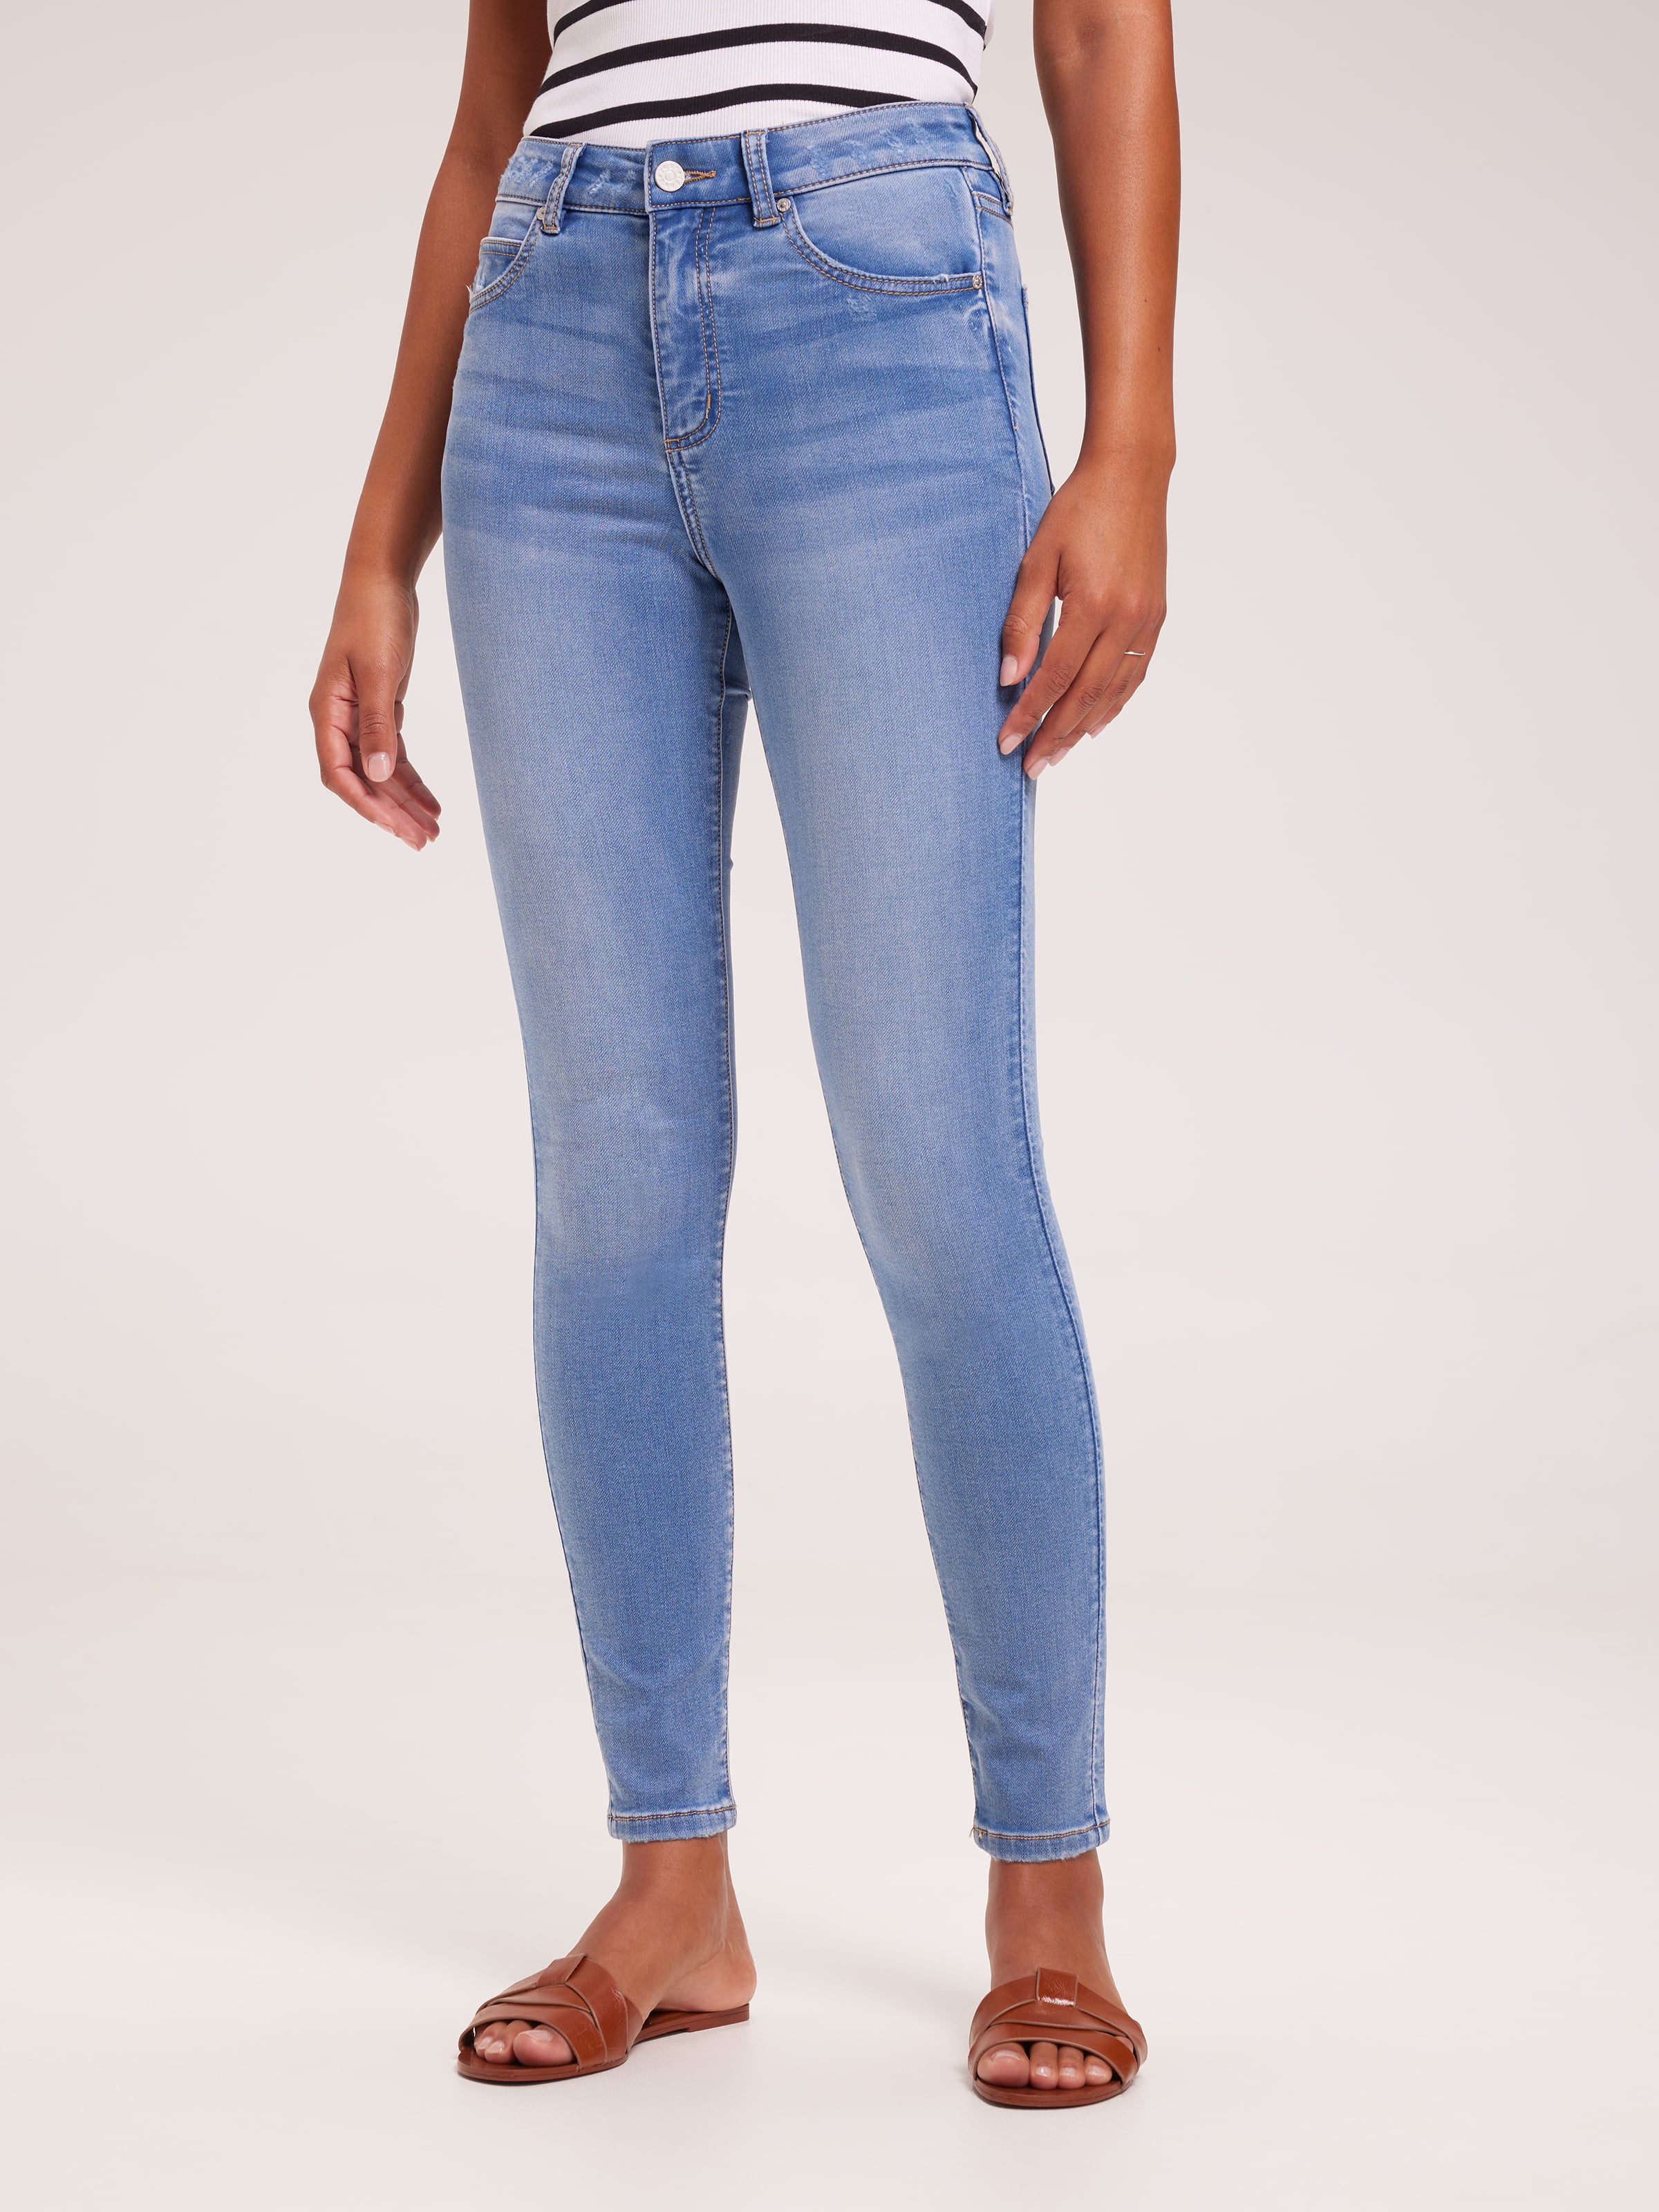 Skinny Ankle Grazer Jeans - Dark Denim Blue or Denim Blue - Just $8